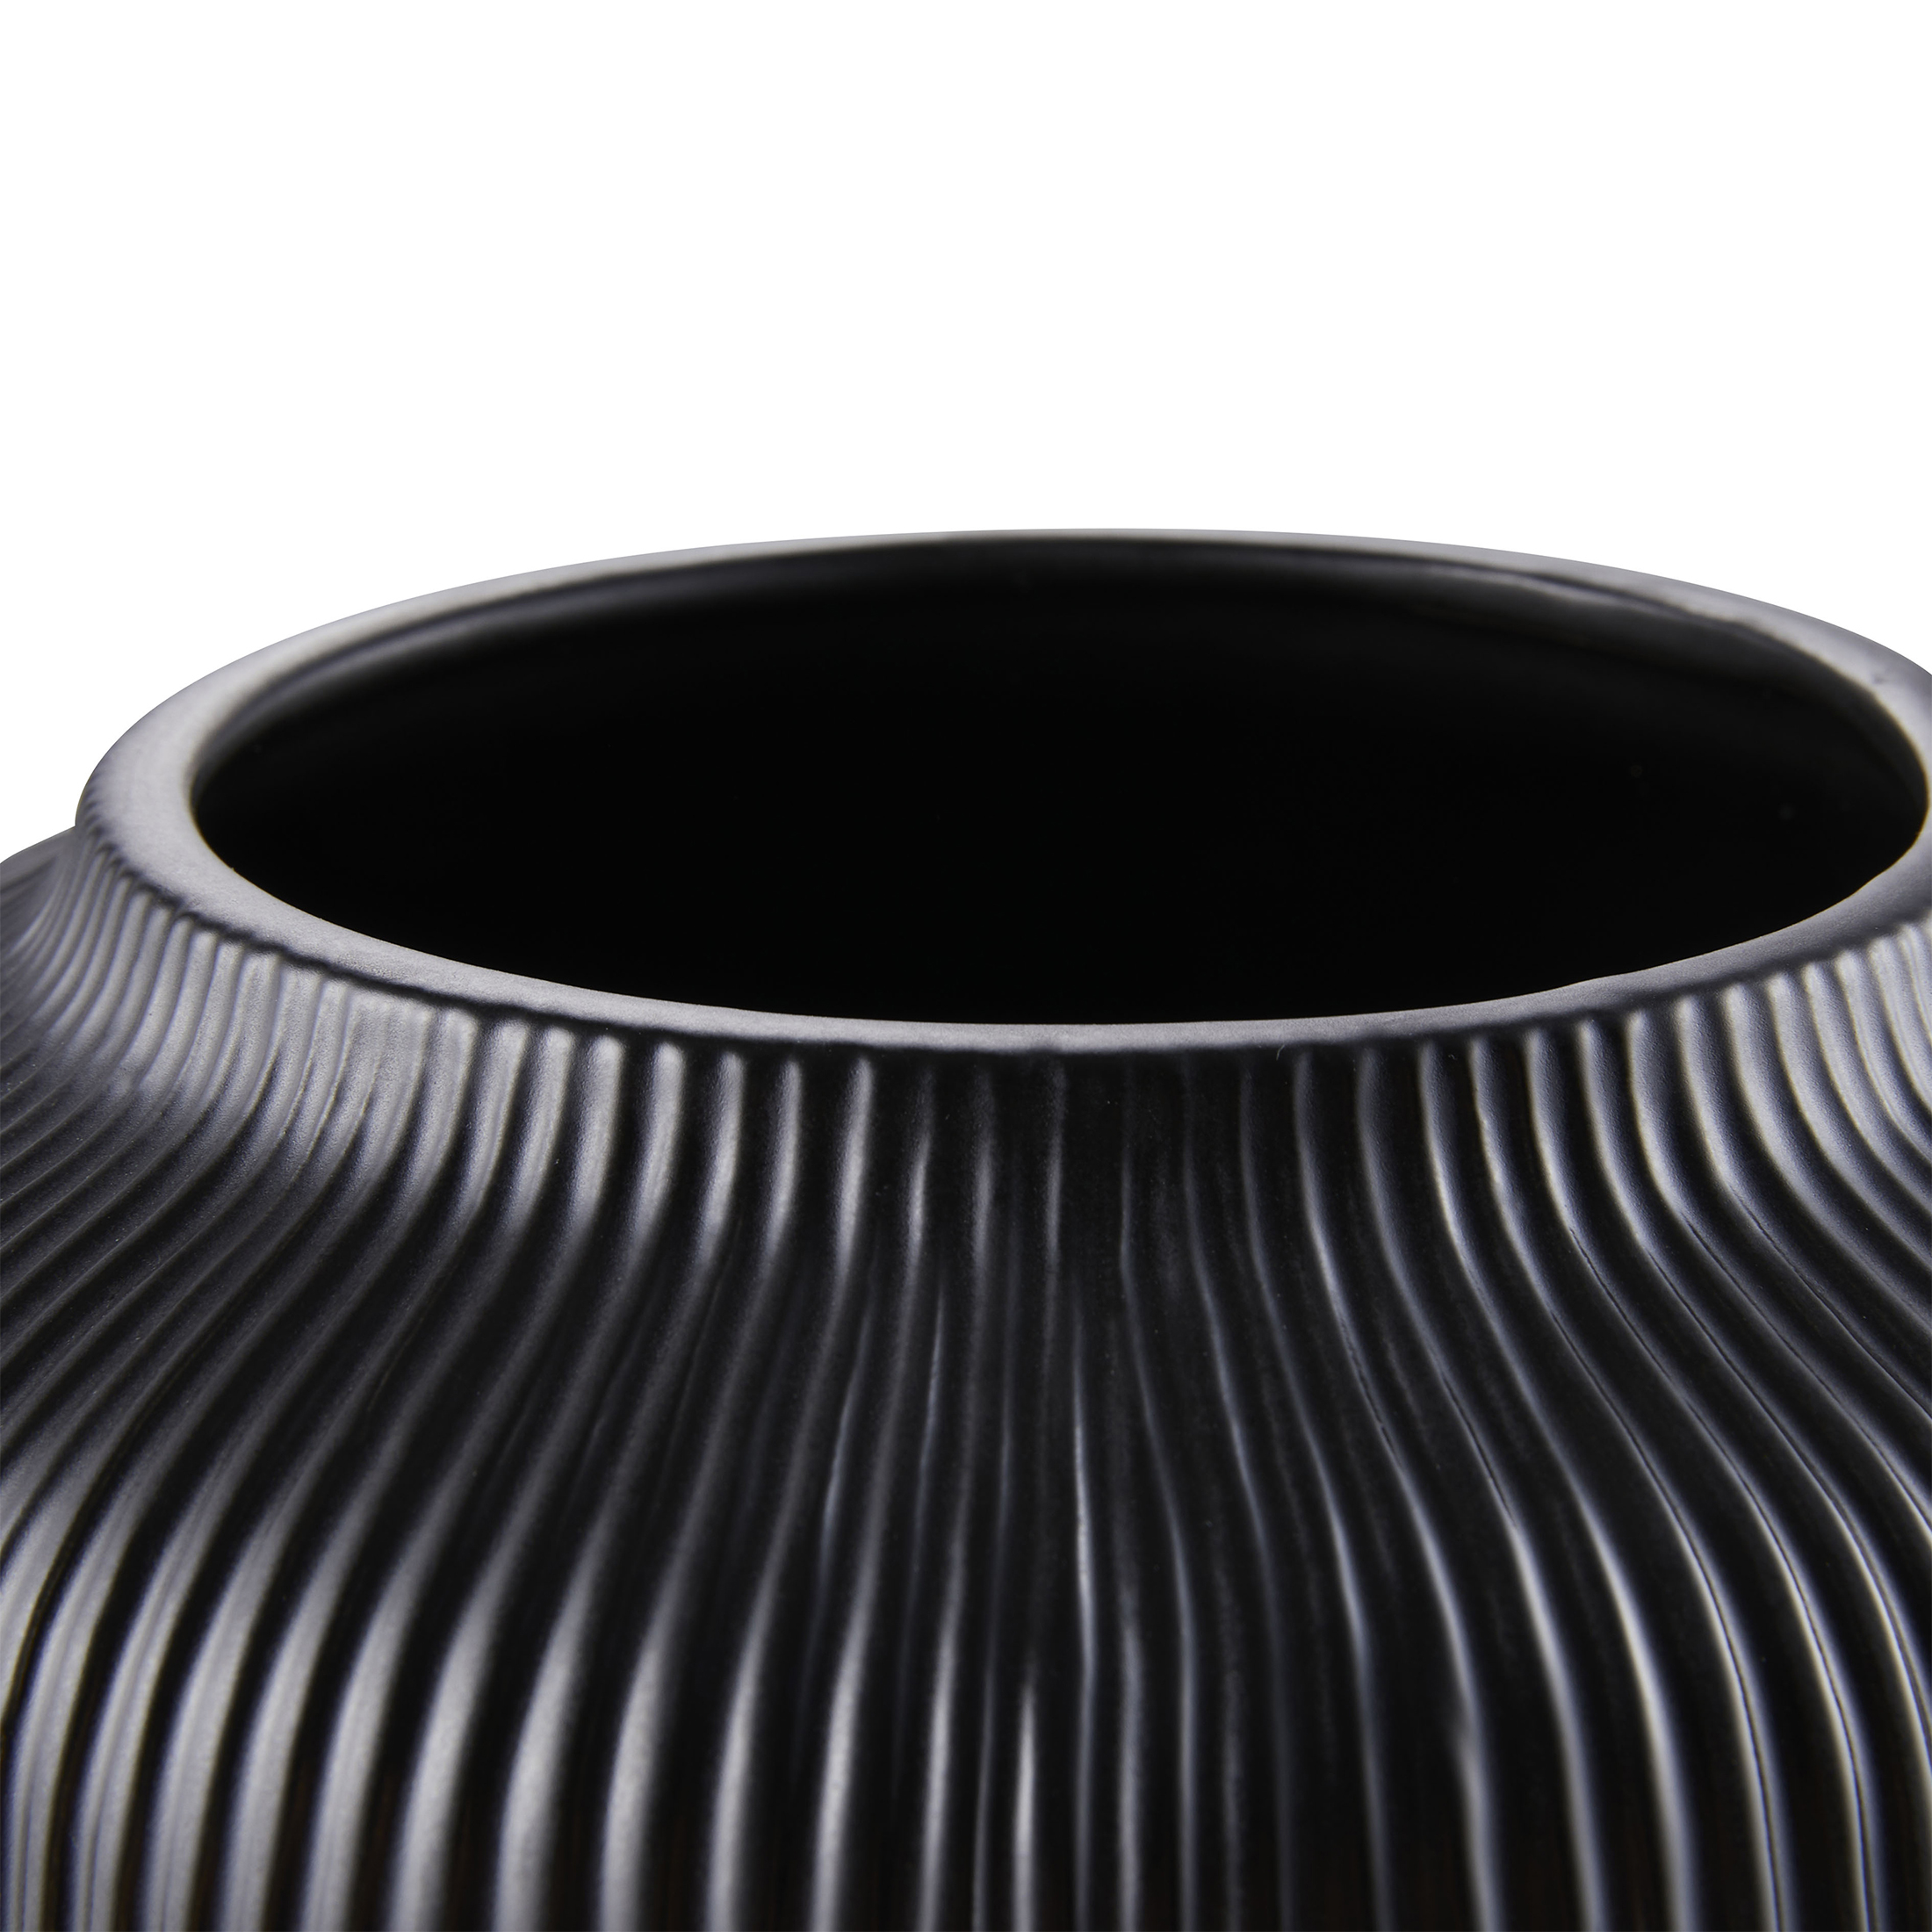 My Texas House 5" Black Textured Stripe Round Stoneware Vase - image 2 of 5